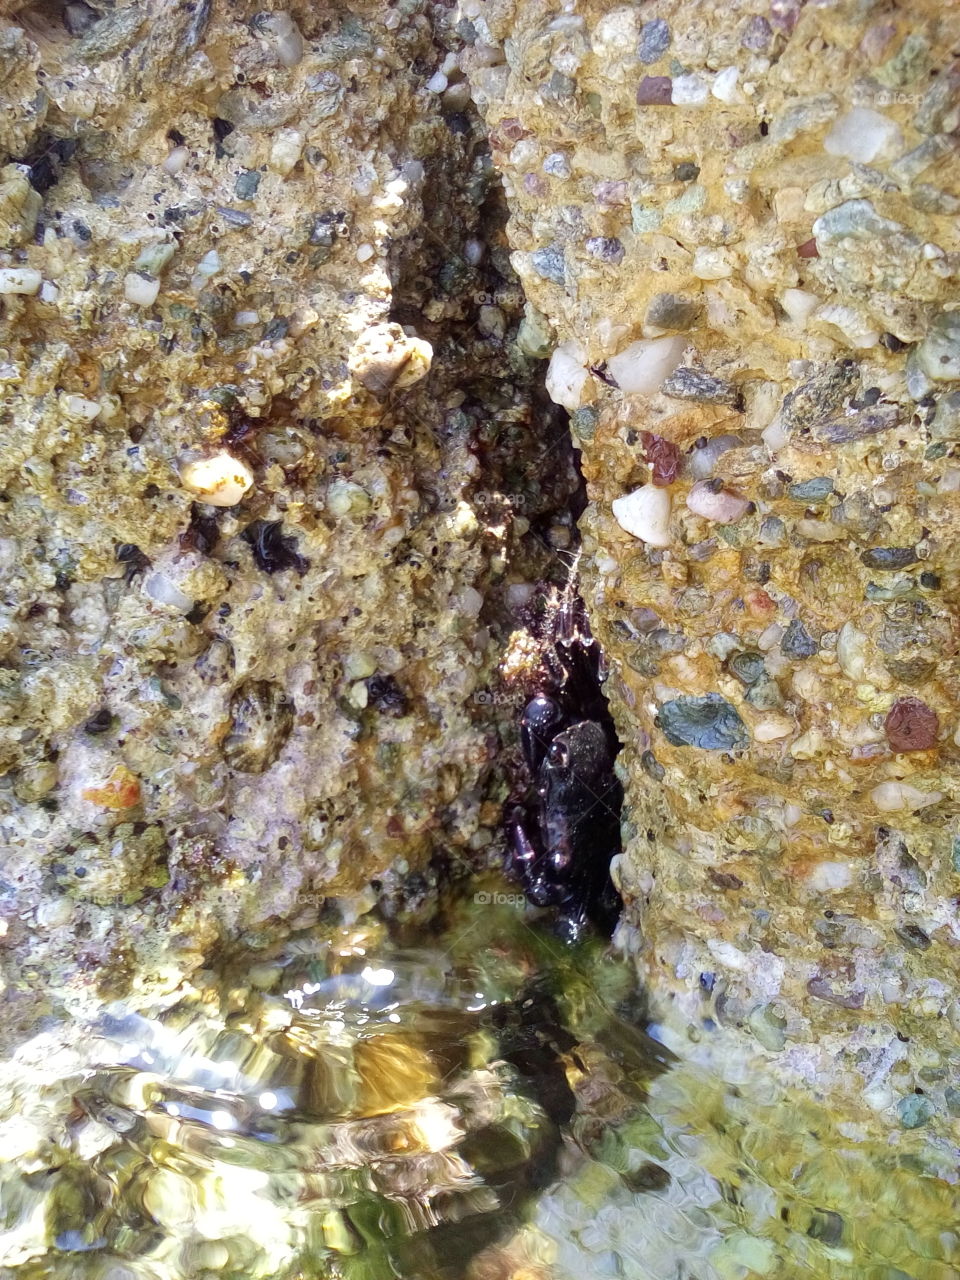 Black Crab Between Rocks